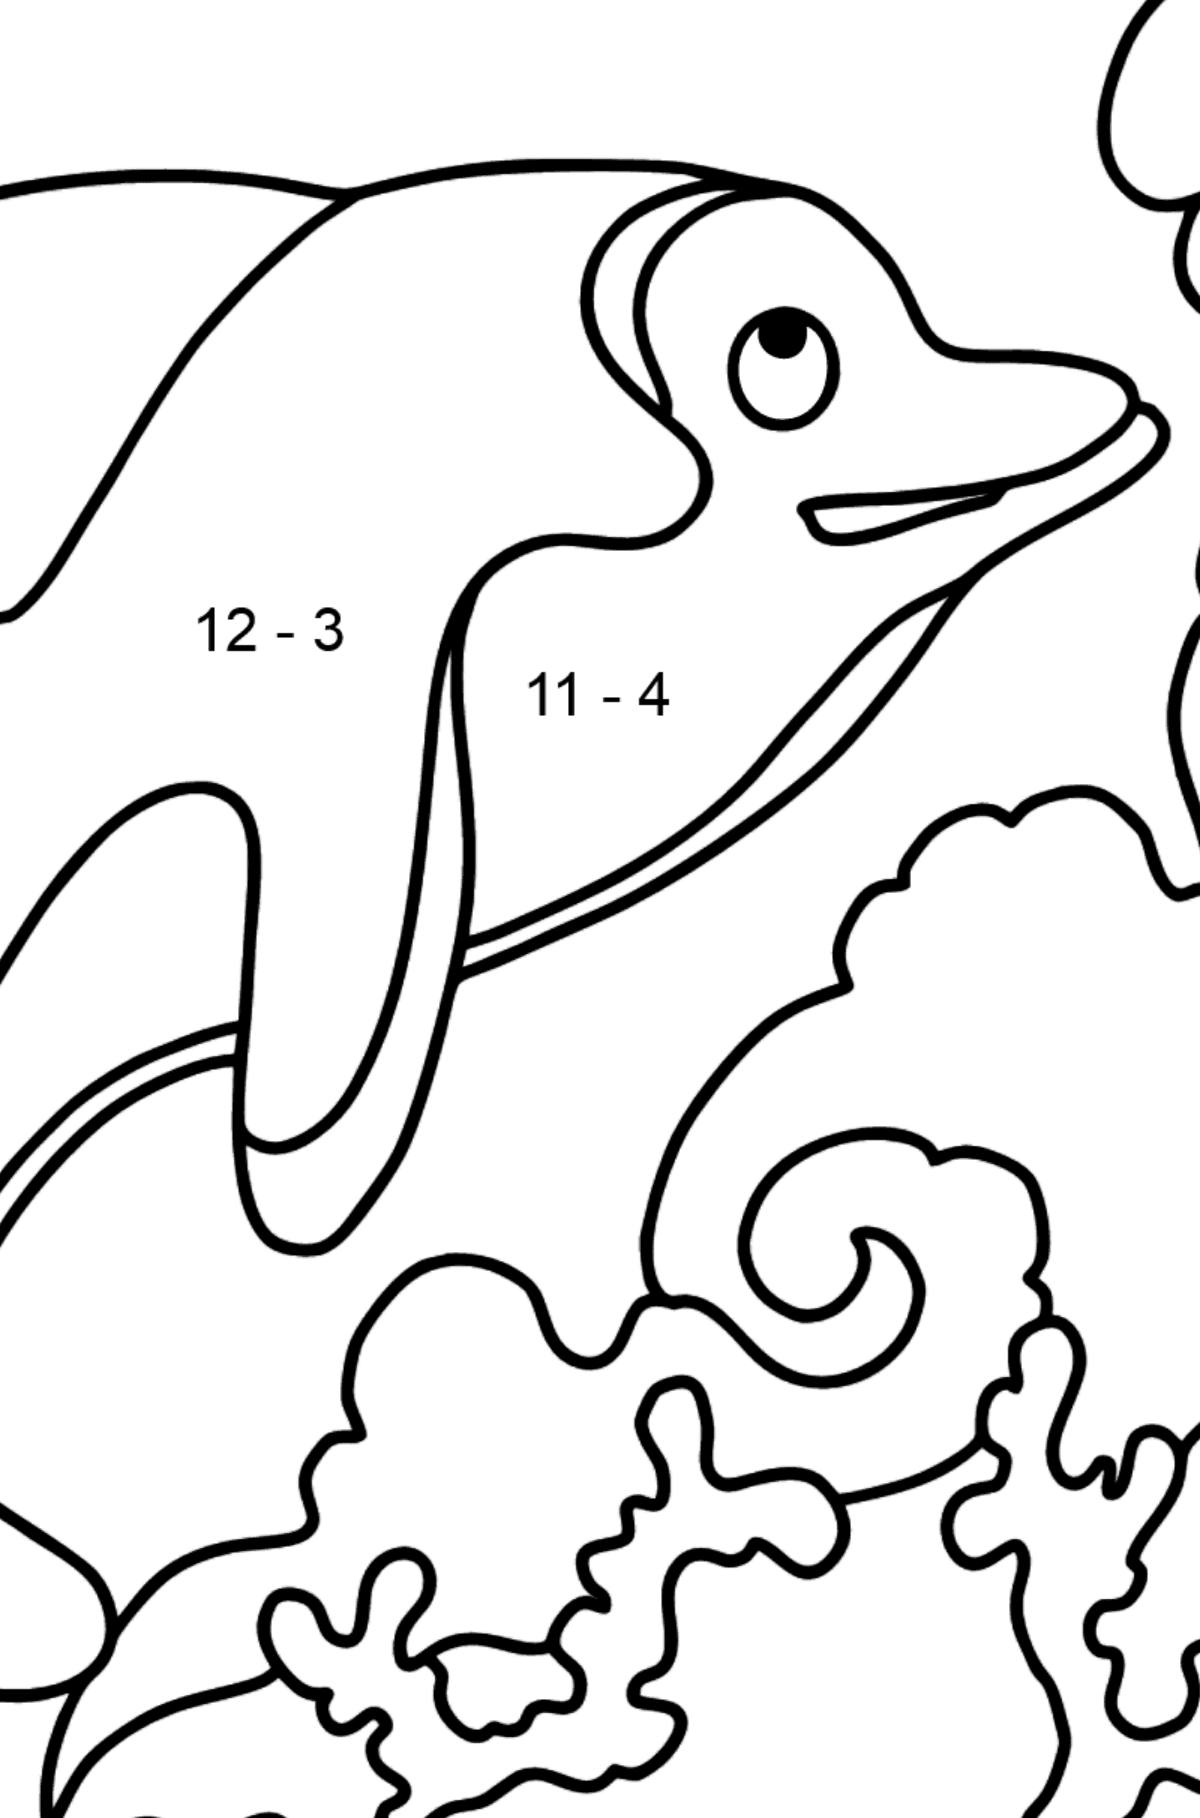 Розмальовка Дельфін для дітей - Математична Розмальовка Віднімання для дітей